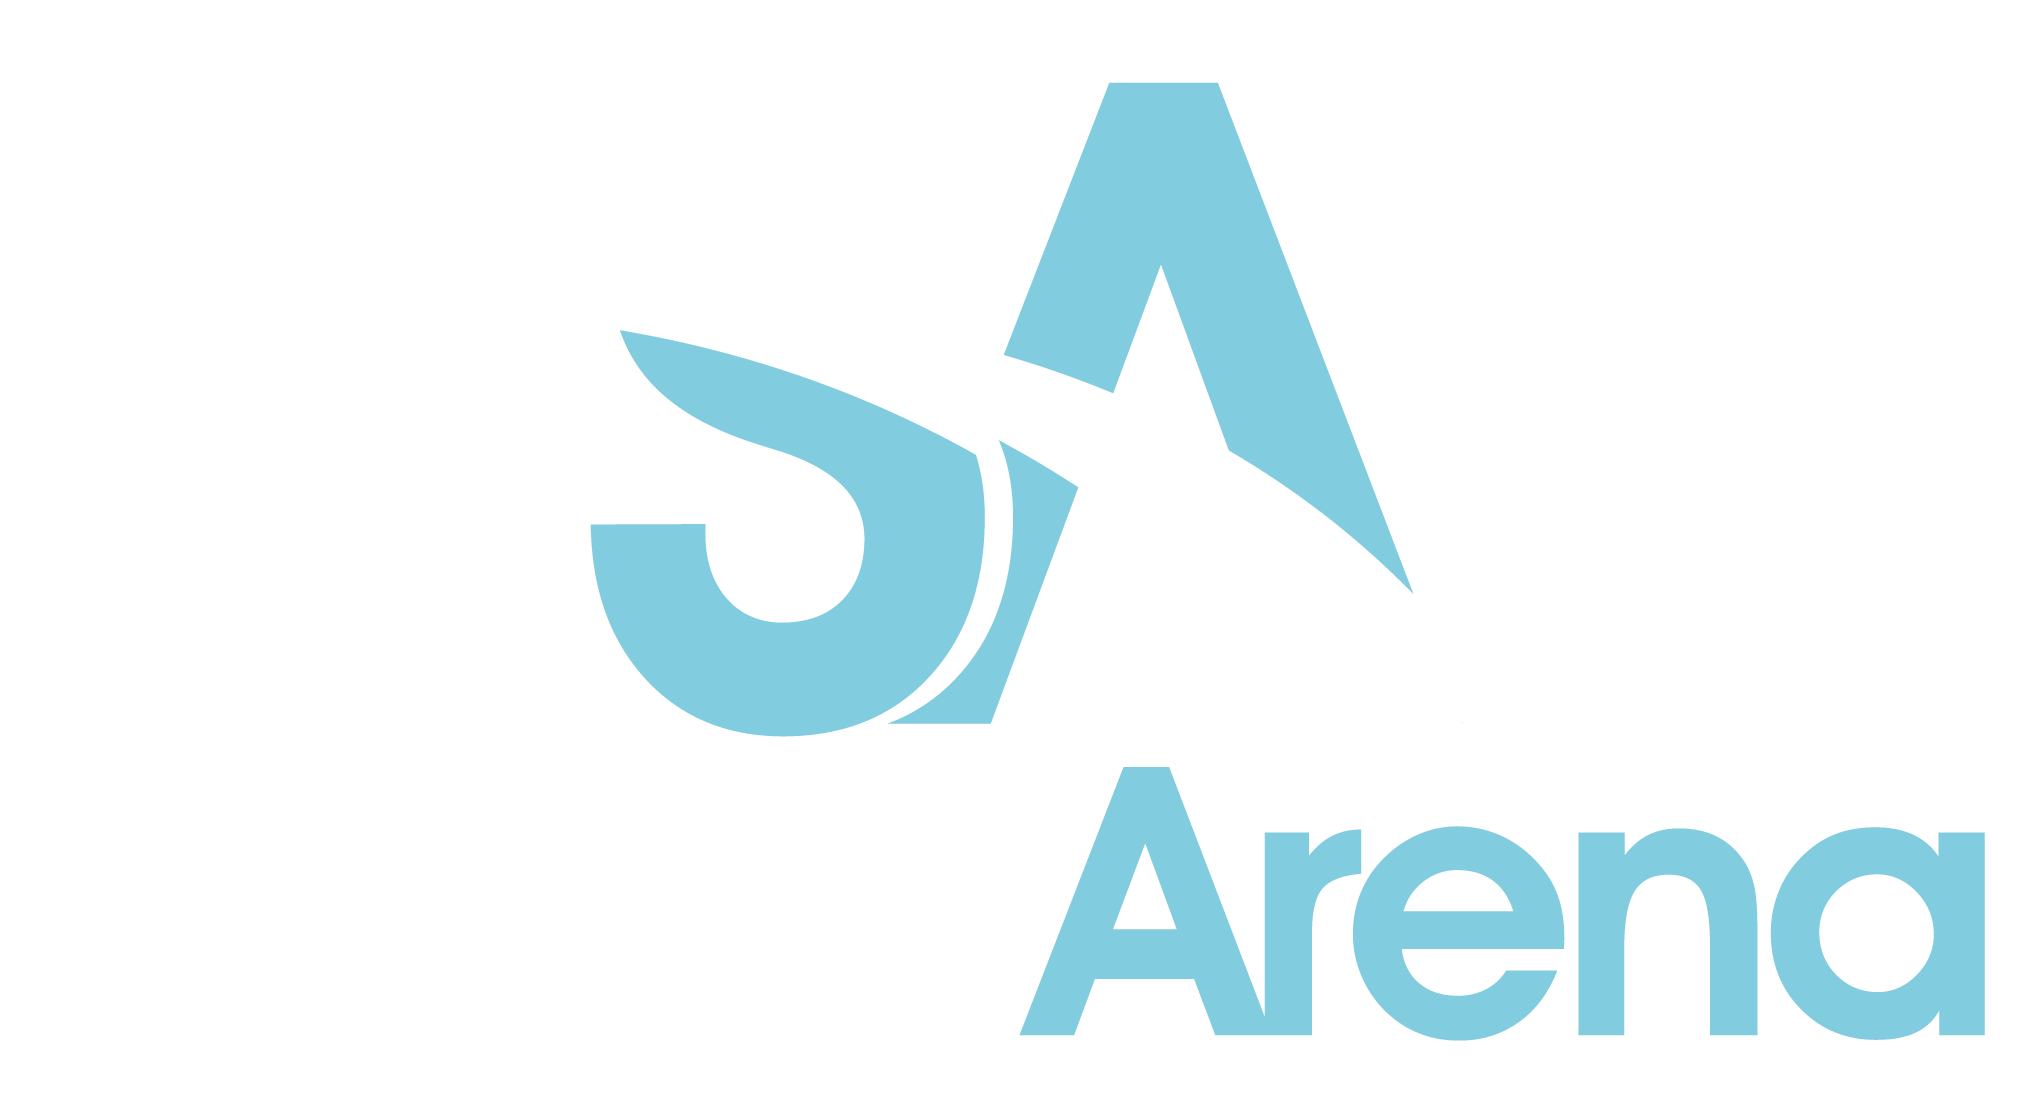 Seller's Arena logo.